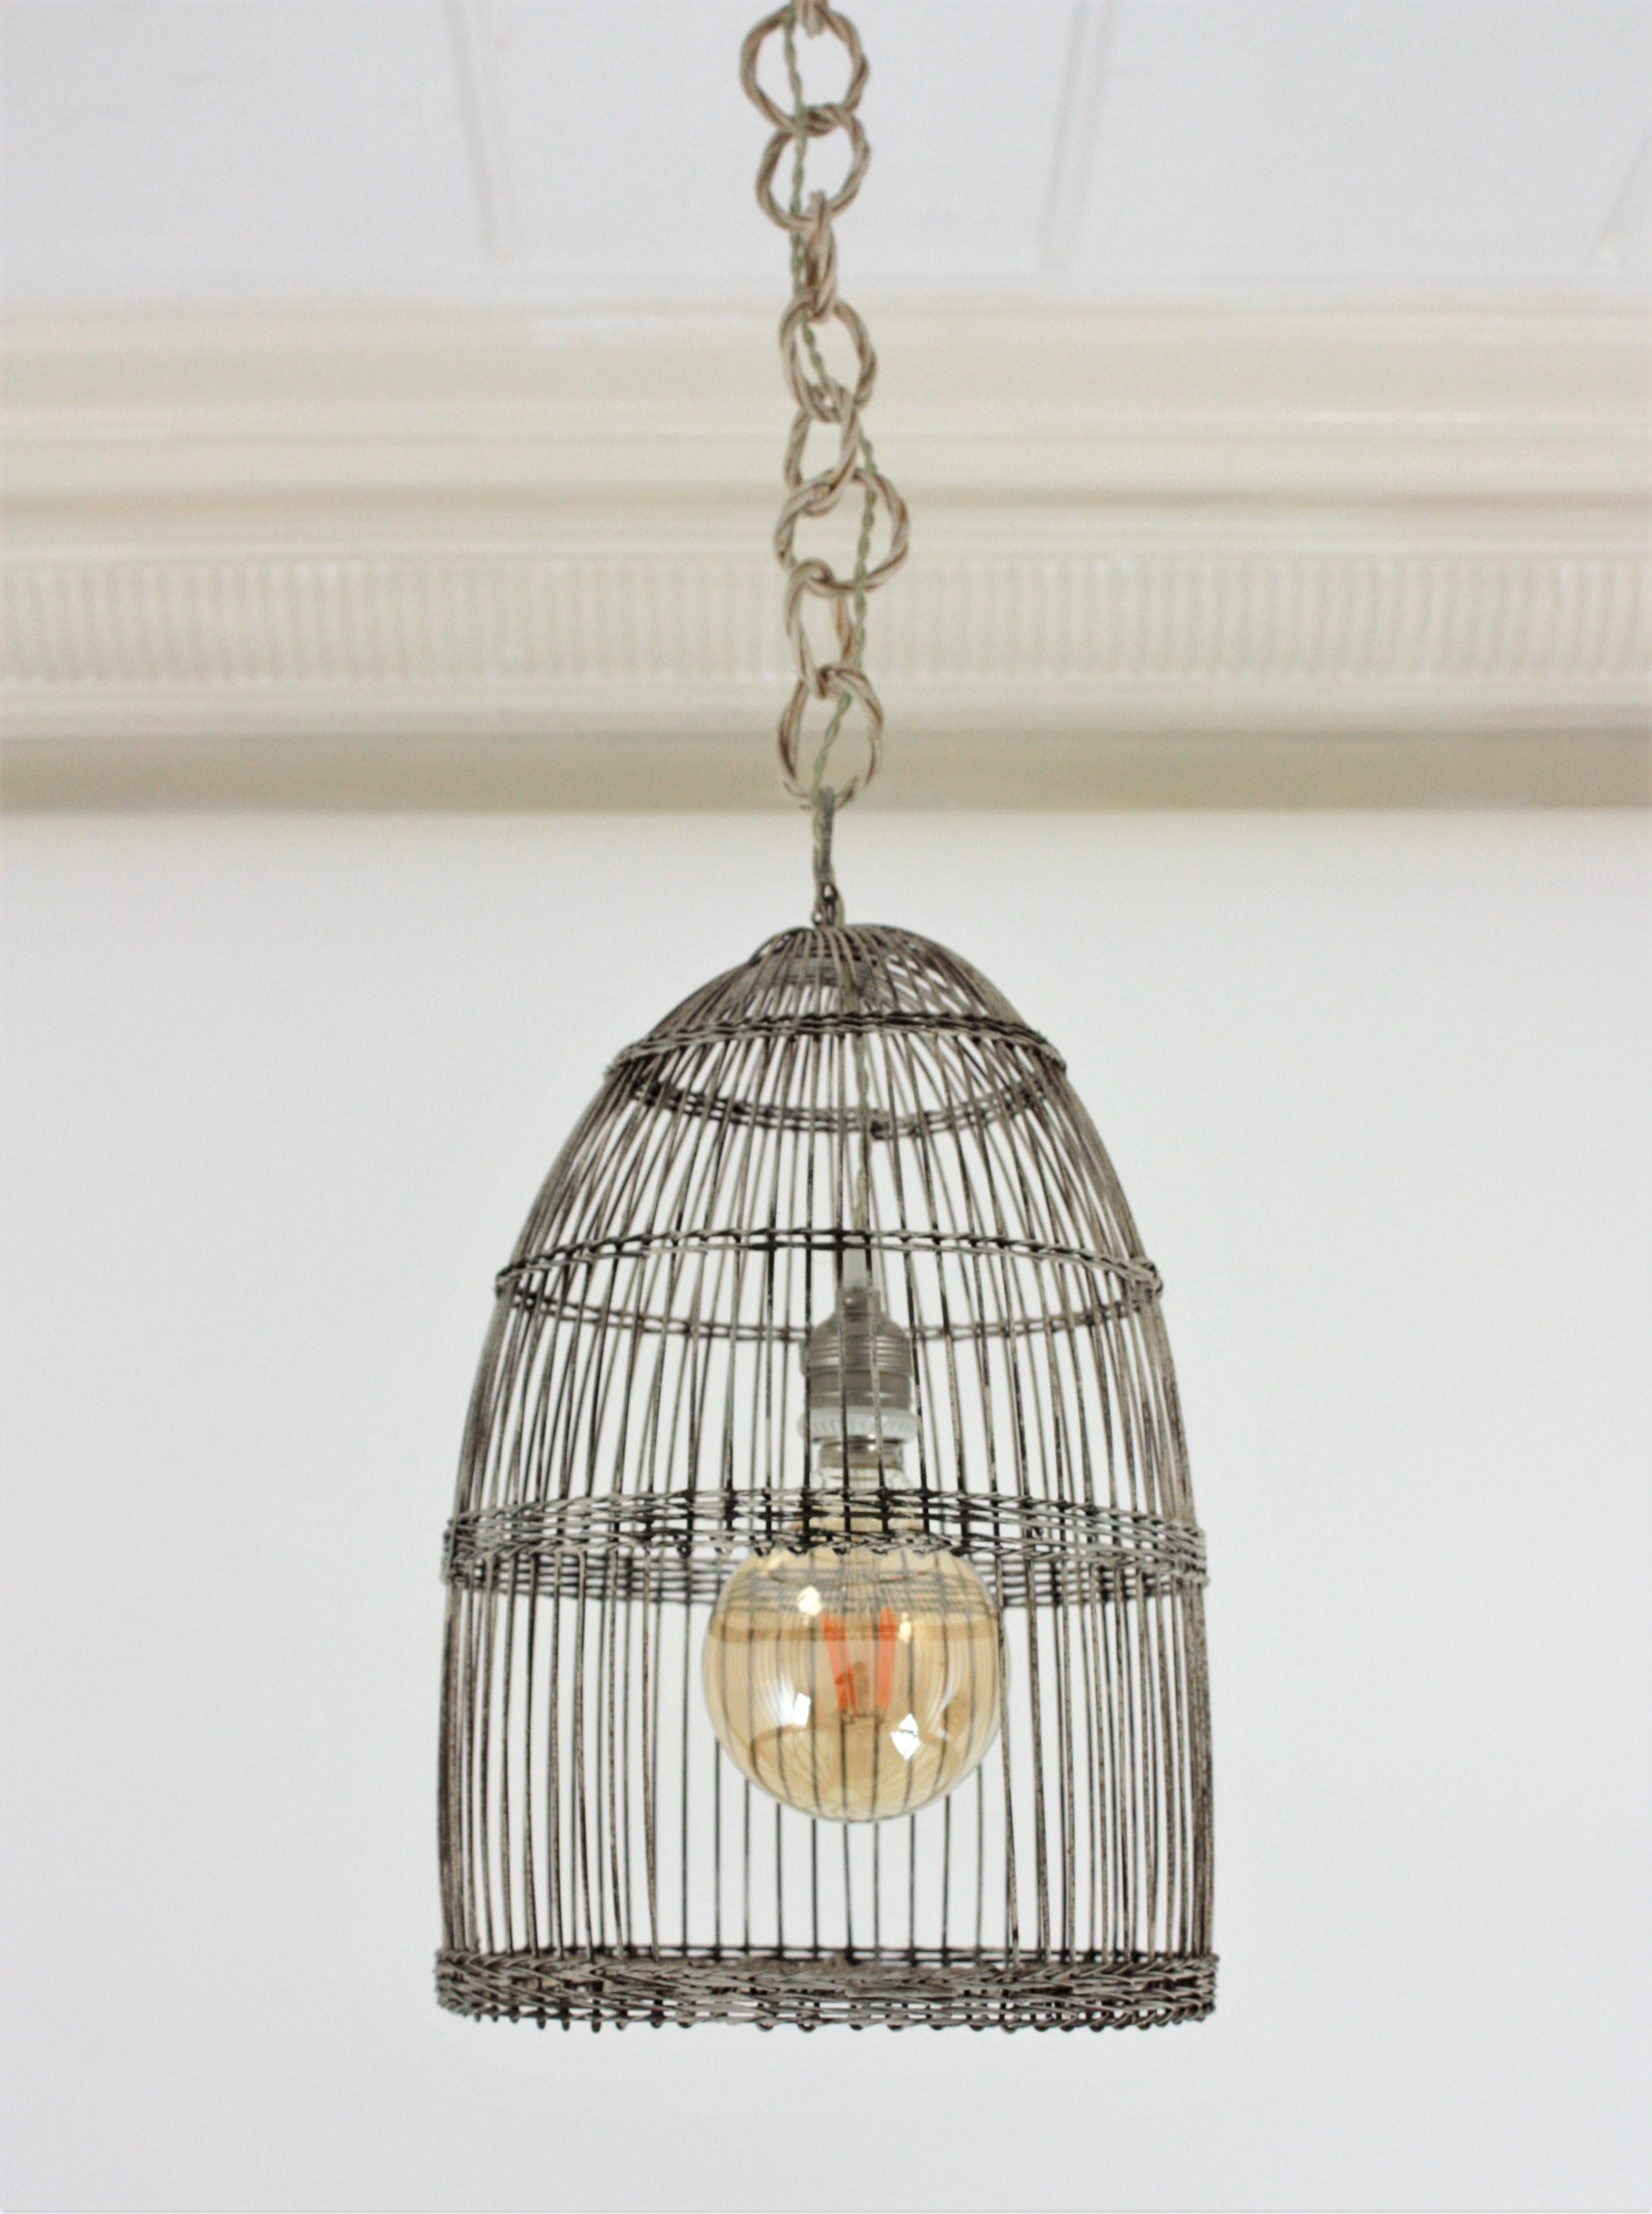 Bohemian Birdcage Rustic Hanging Light Pendant Lamp